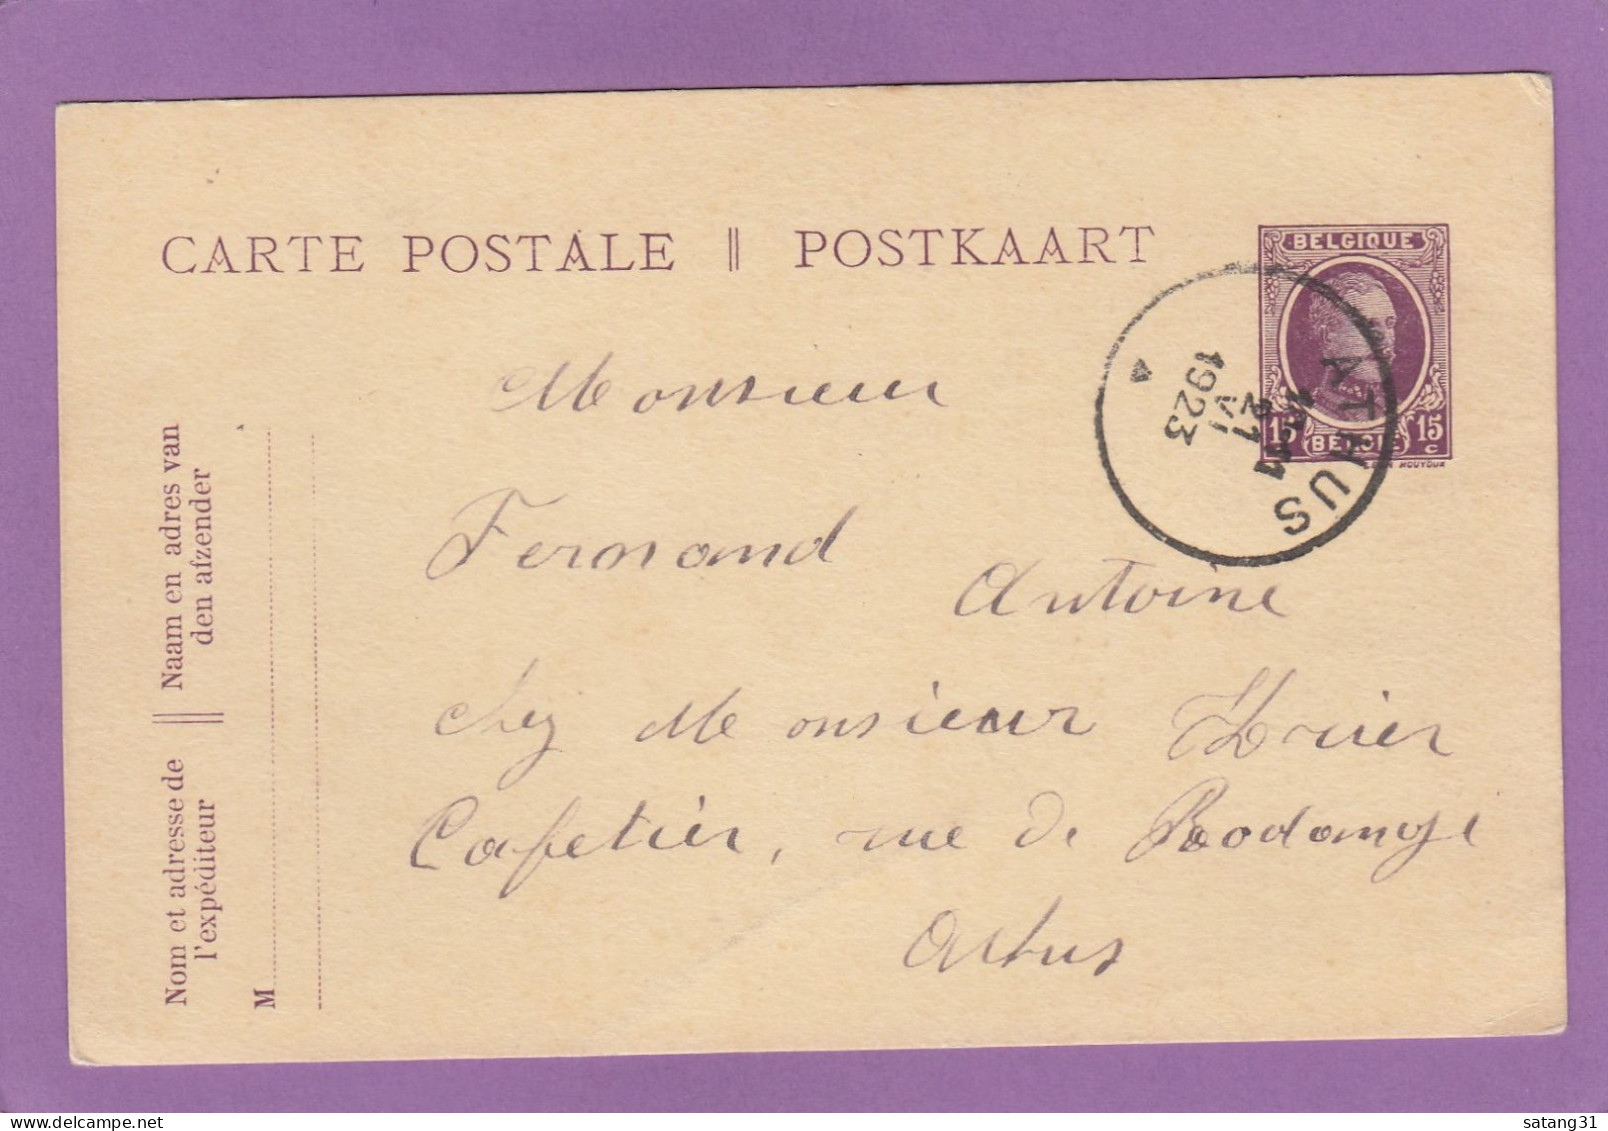 ENTIER POSTAL D'ATHUS ADRESSE A UN CAFETIER A ATHUS,1923. - Postkarten 1909-1934